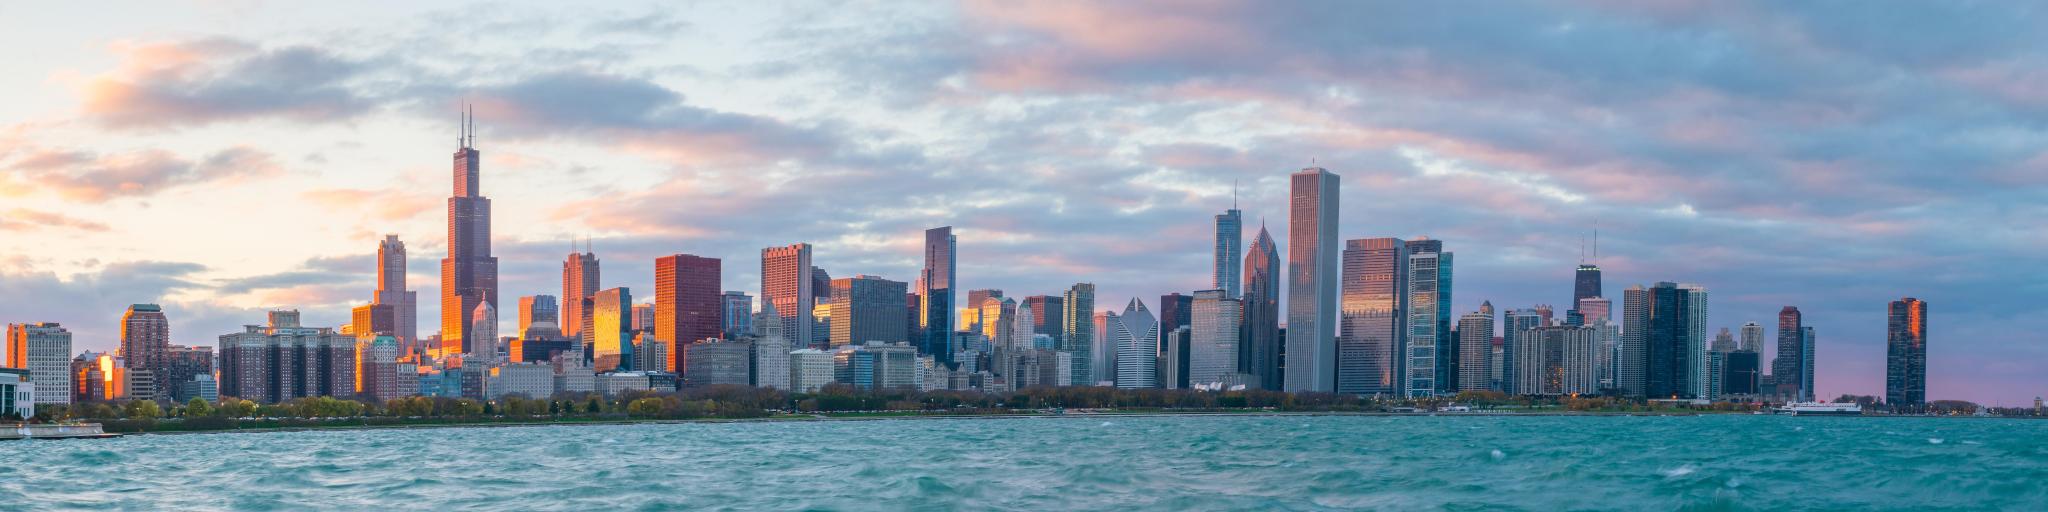 Downtown chicago skyline at sunset Illinois, USA